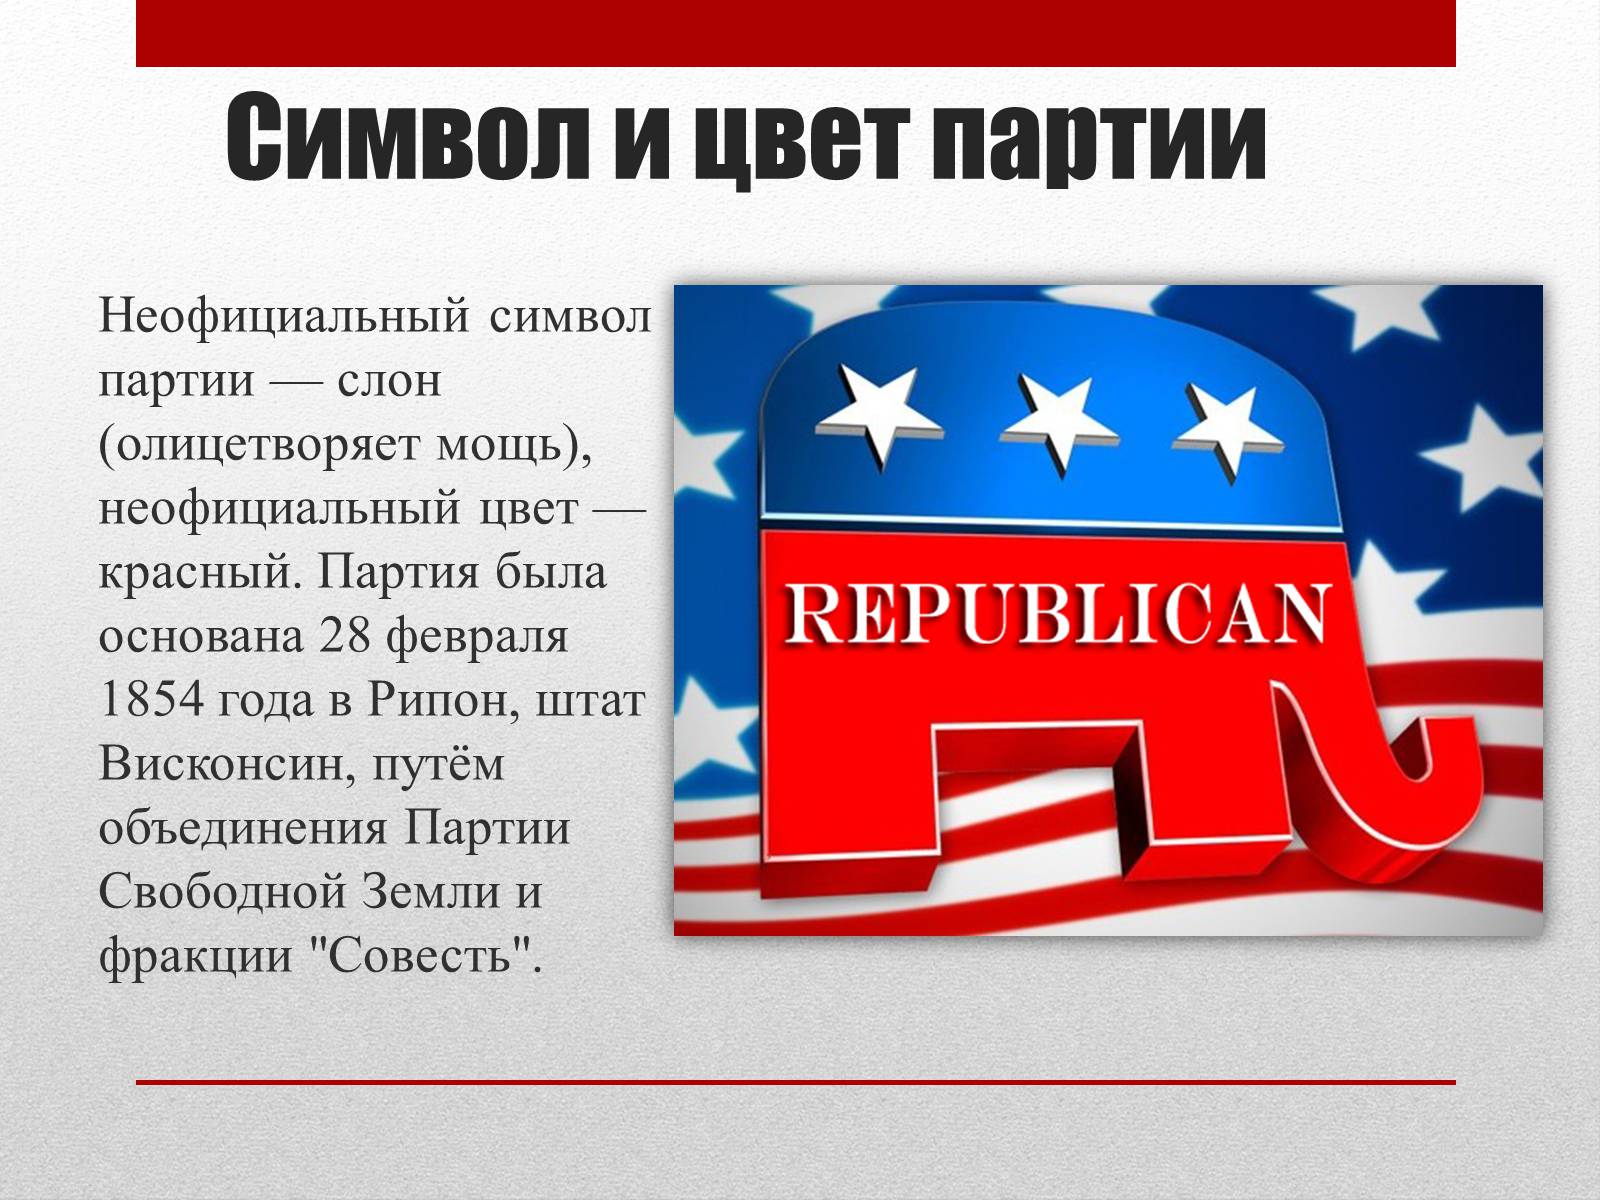 Презентація на тему «Республиканская партия США» - Слайд #2